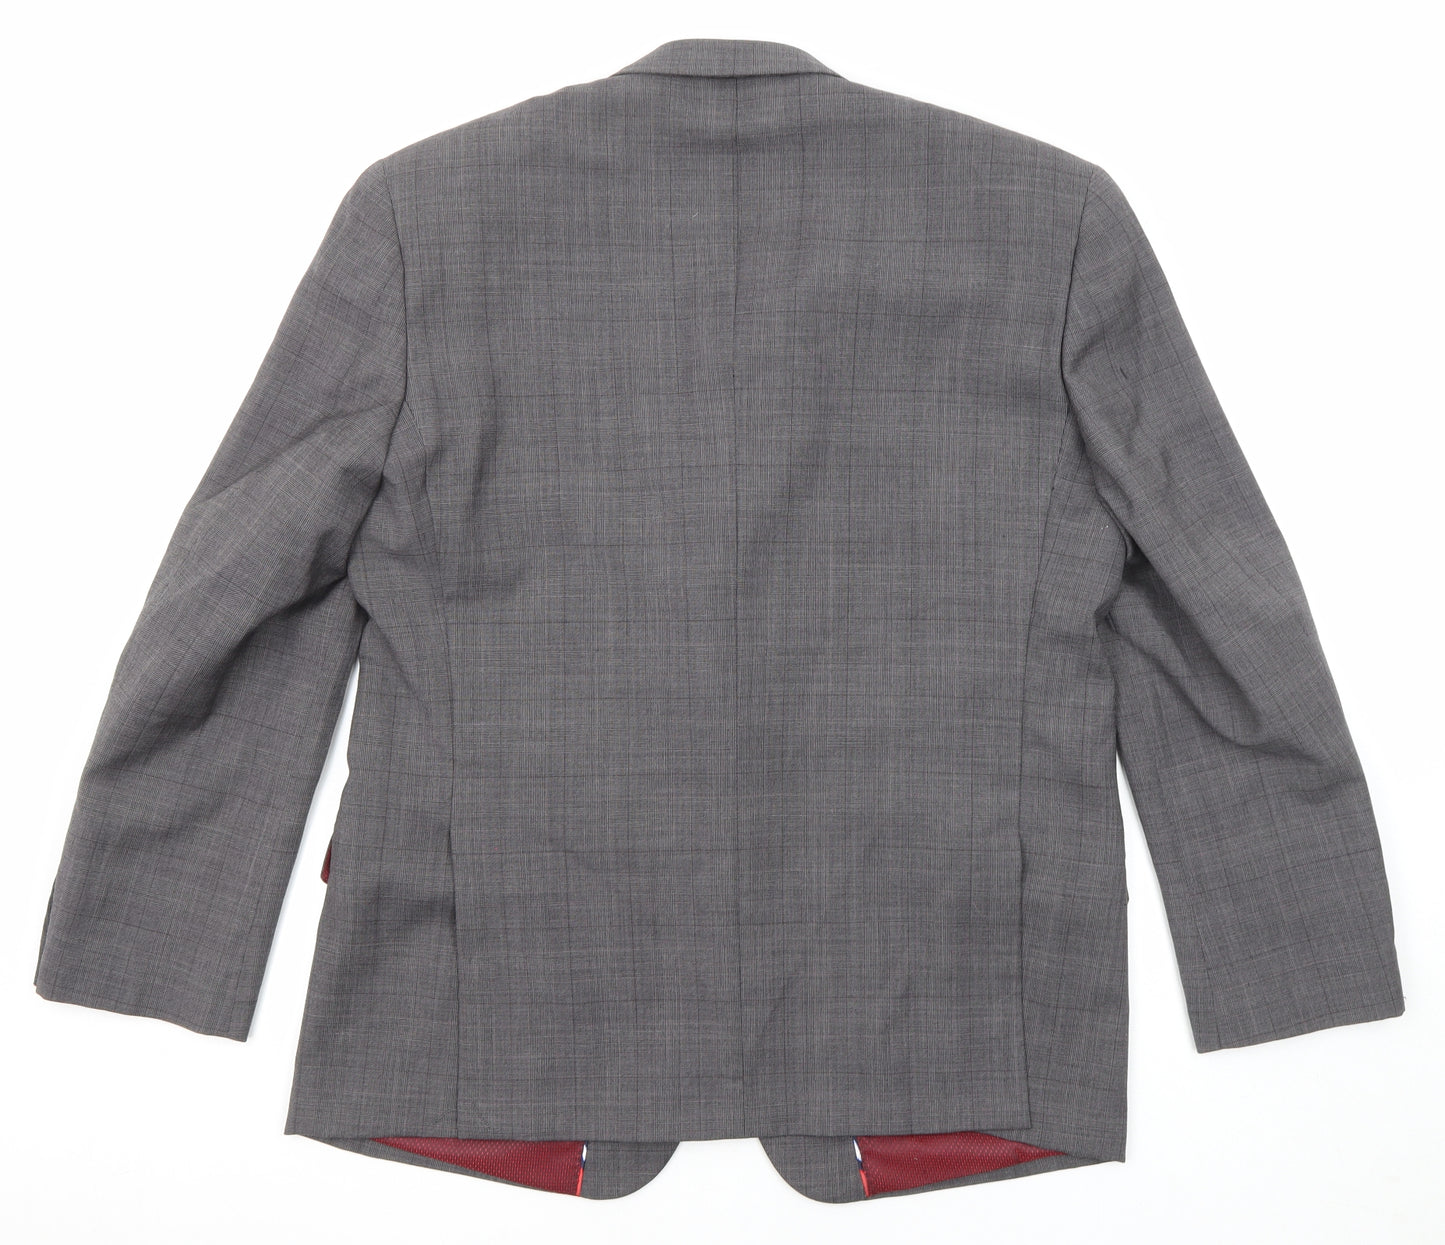 Skopes Mens Grey Check Wool Jacket Suit Jacket Size 42 Regular